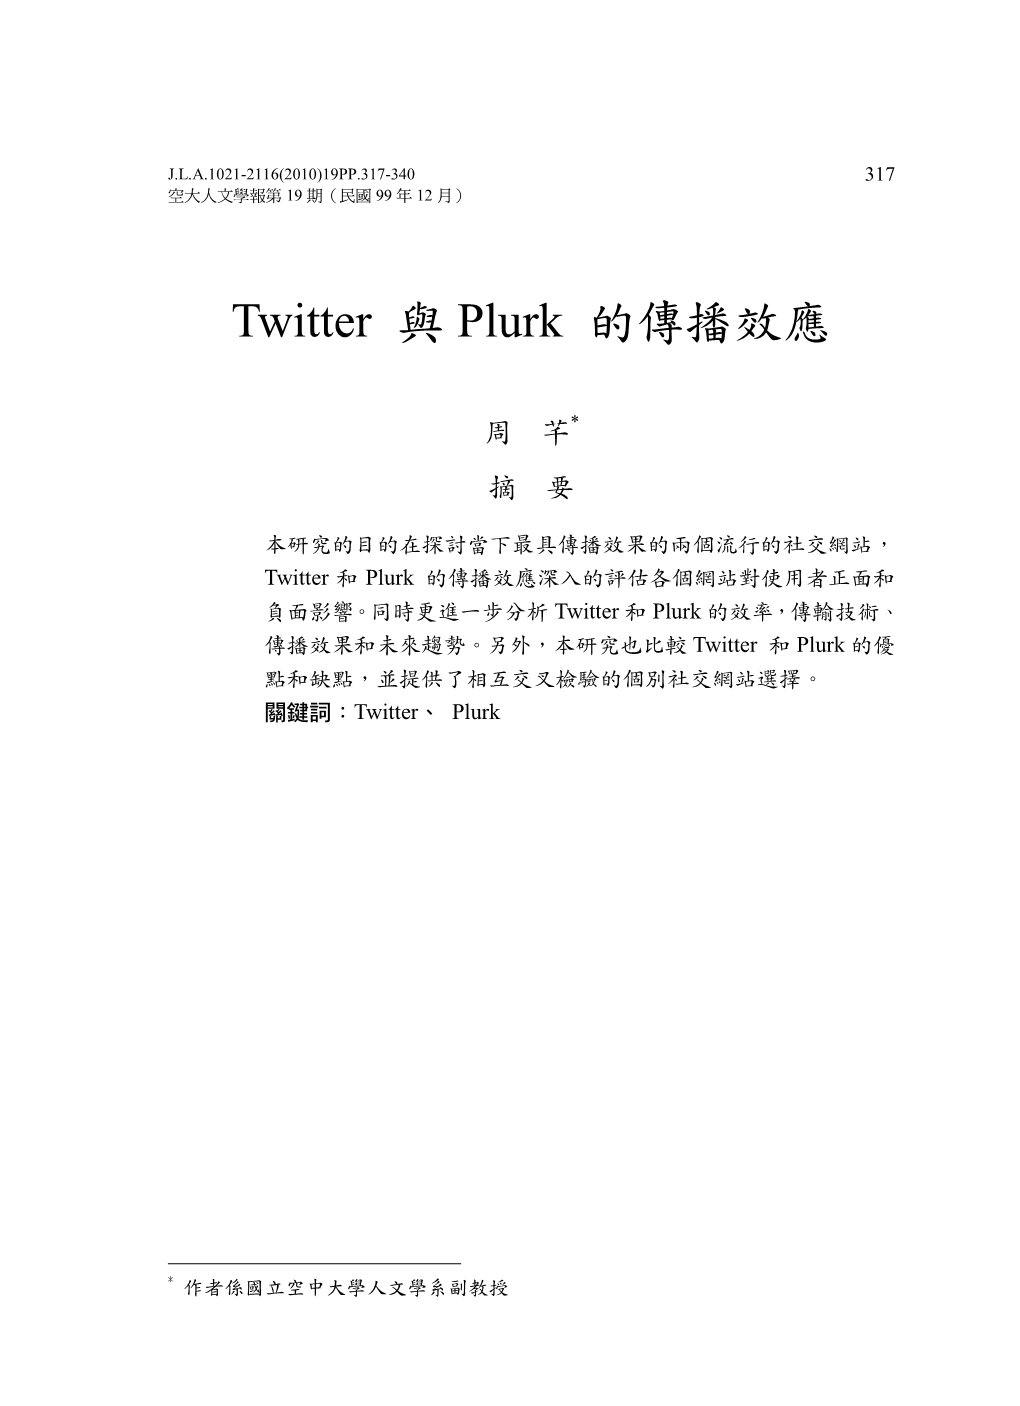 Twitter 與 Plurk 的傳播效應